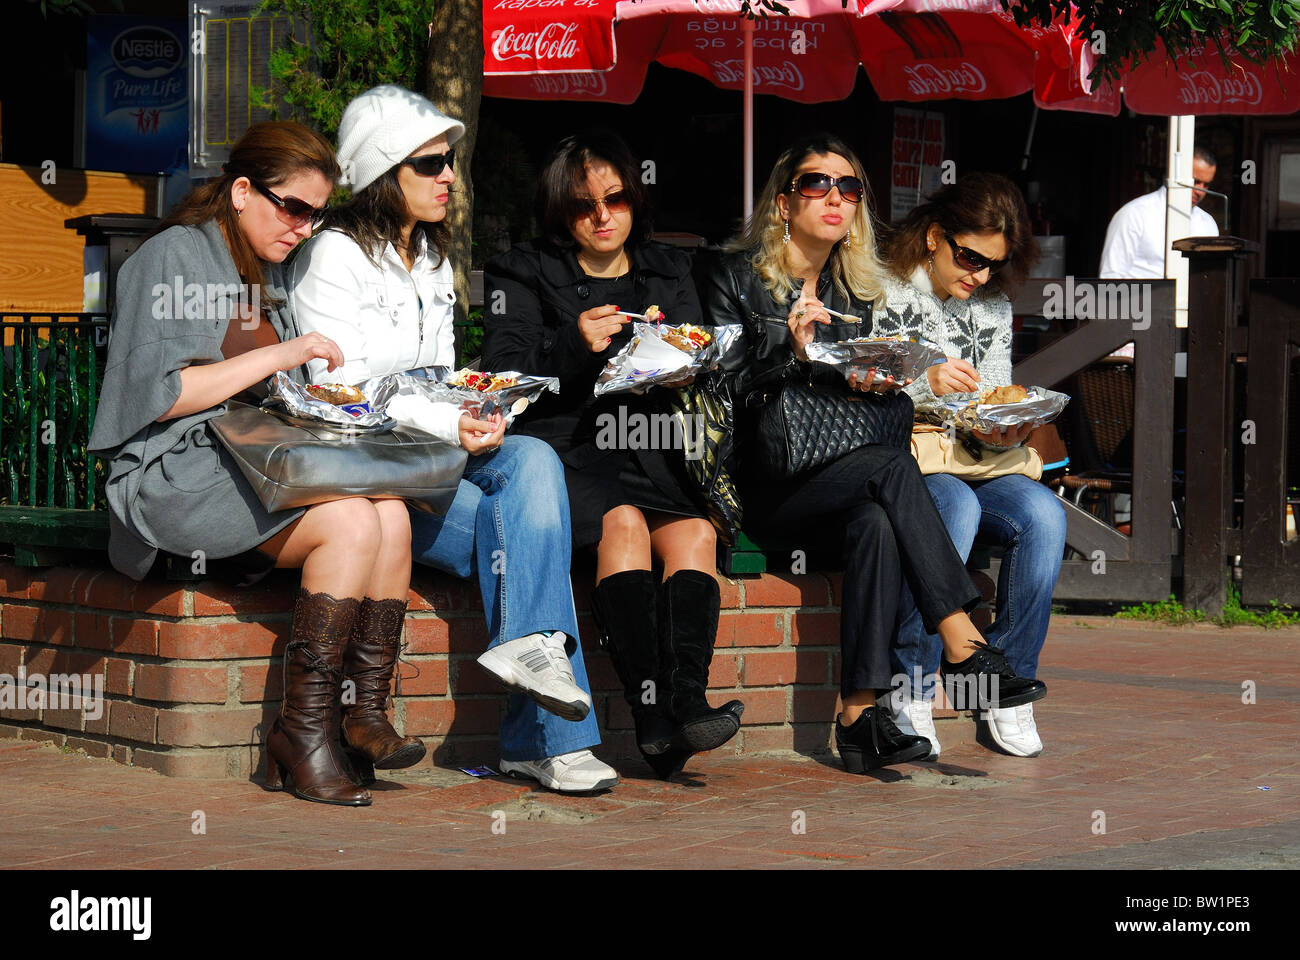 ISTANBUL, TURKEY. Five women eating kumpir (filled baked potatoes) at Ortakoy market, Besiktas district. 2010. Stock Photo